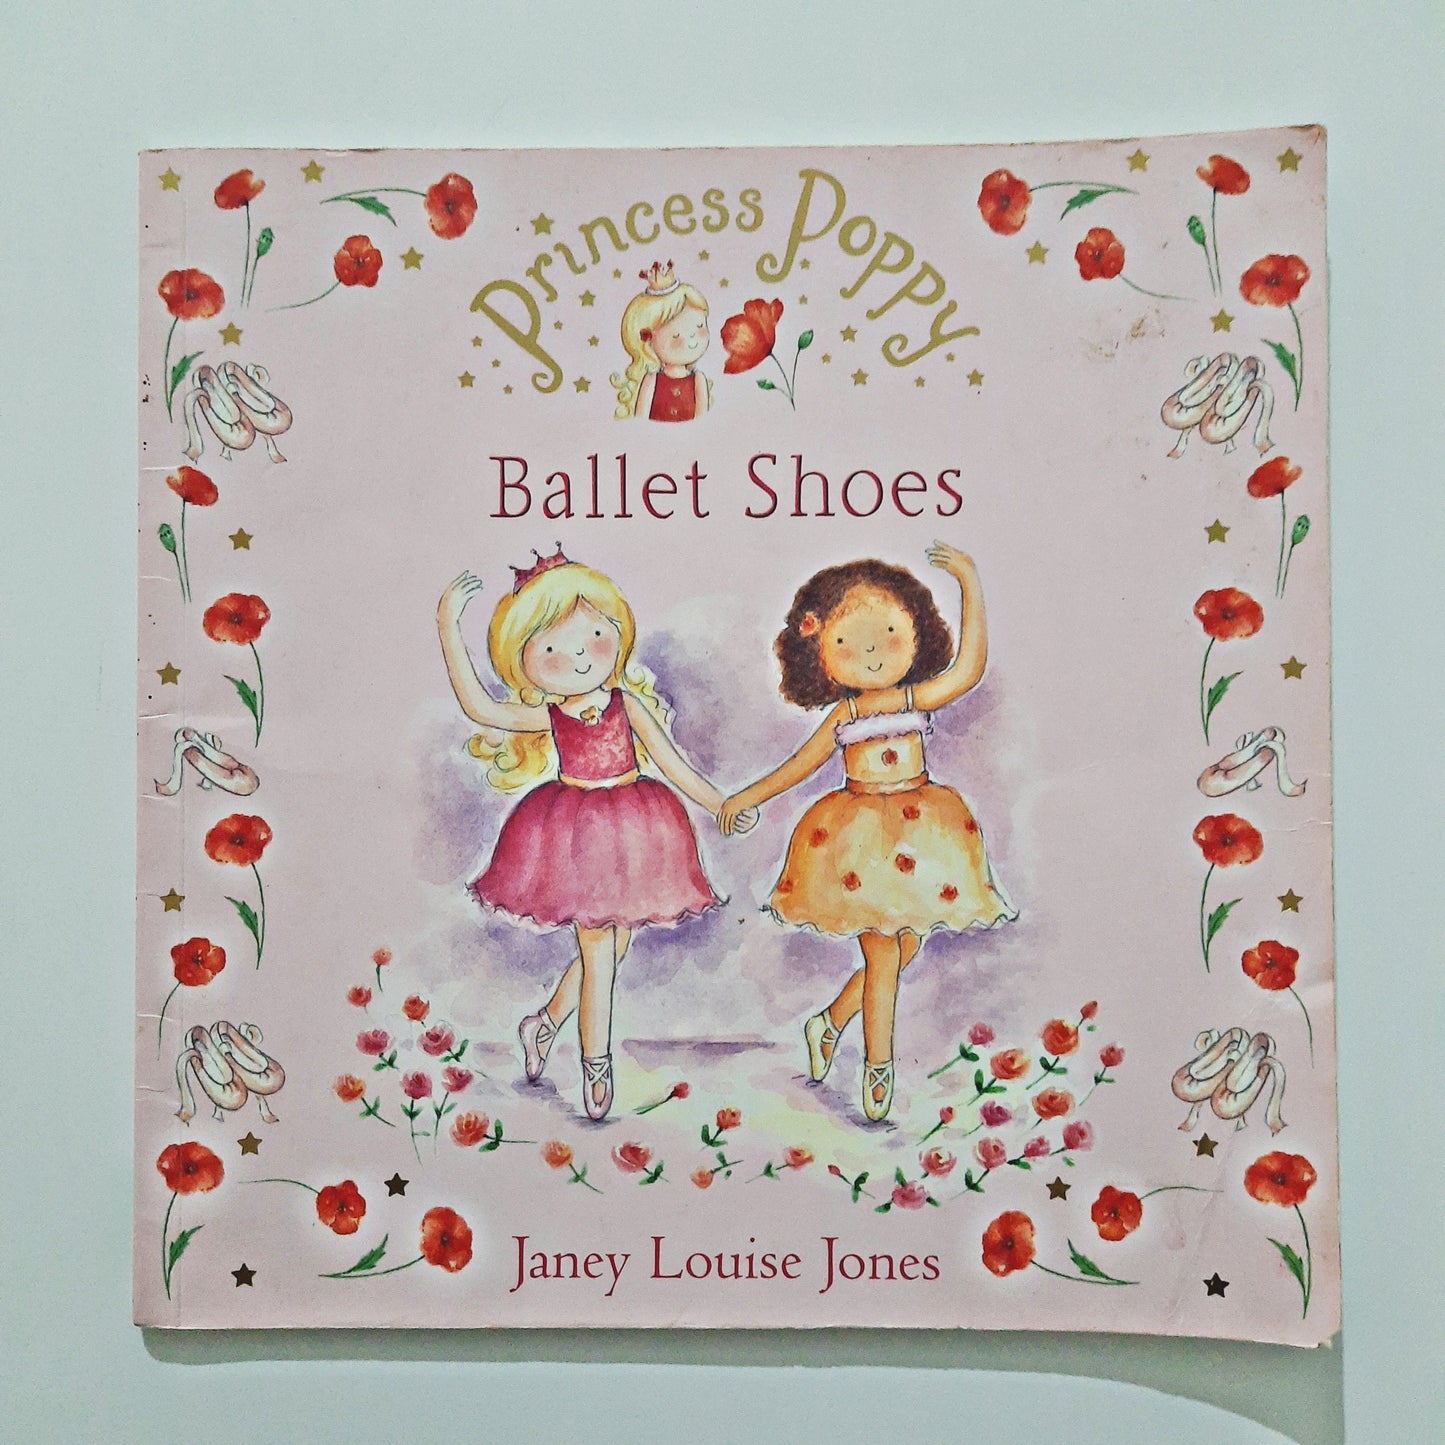 Princess Poppy - Ballet Shoes